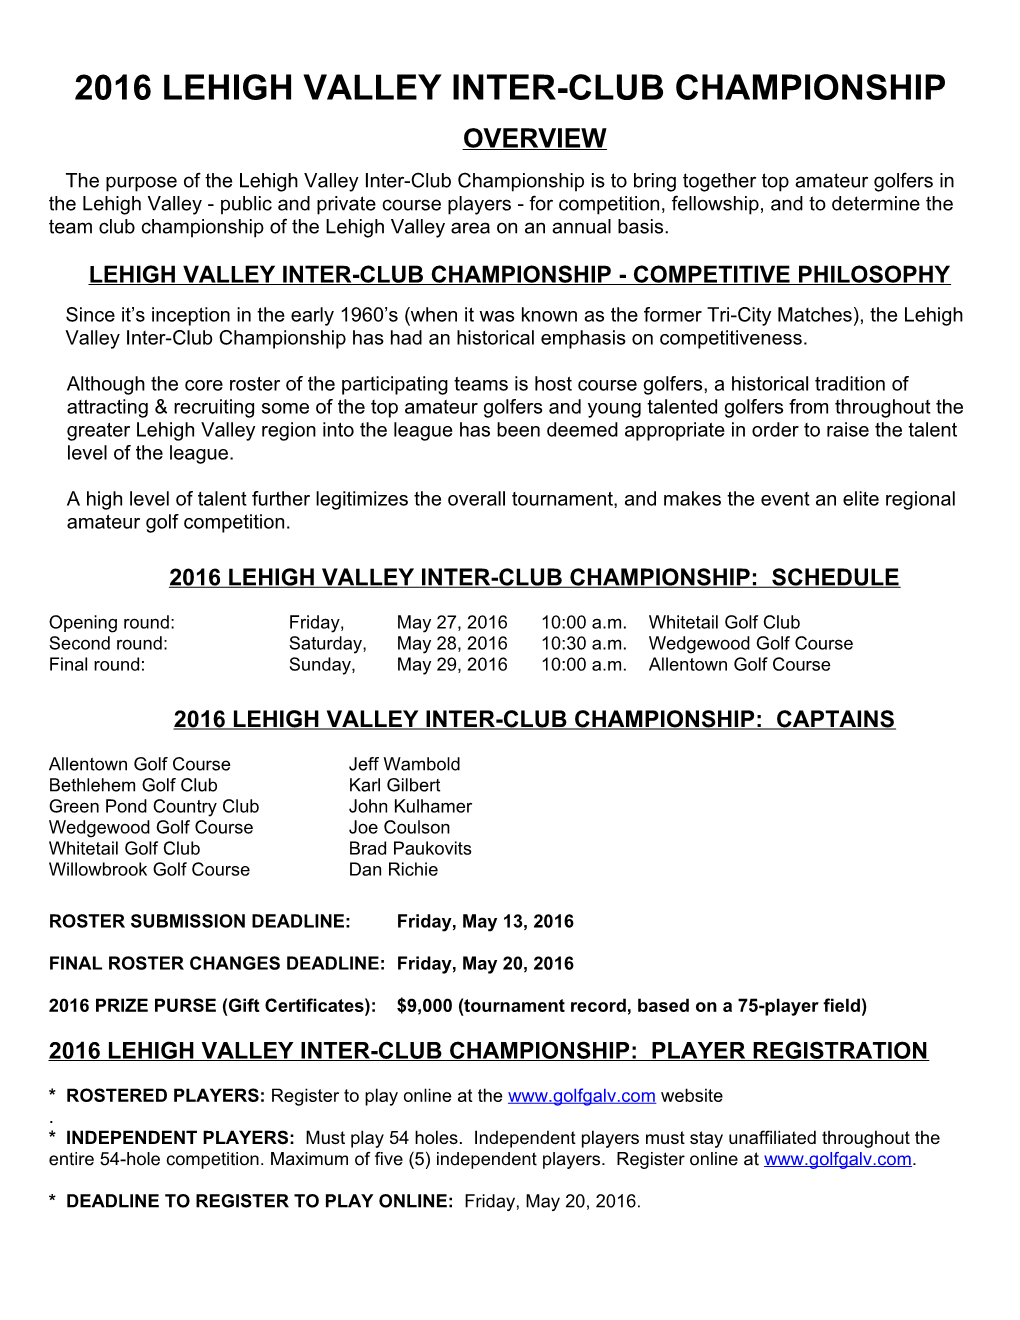 2009 Lehigh Valley Inter-Club Championship